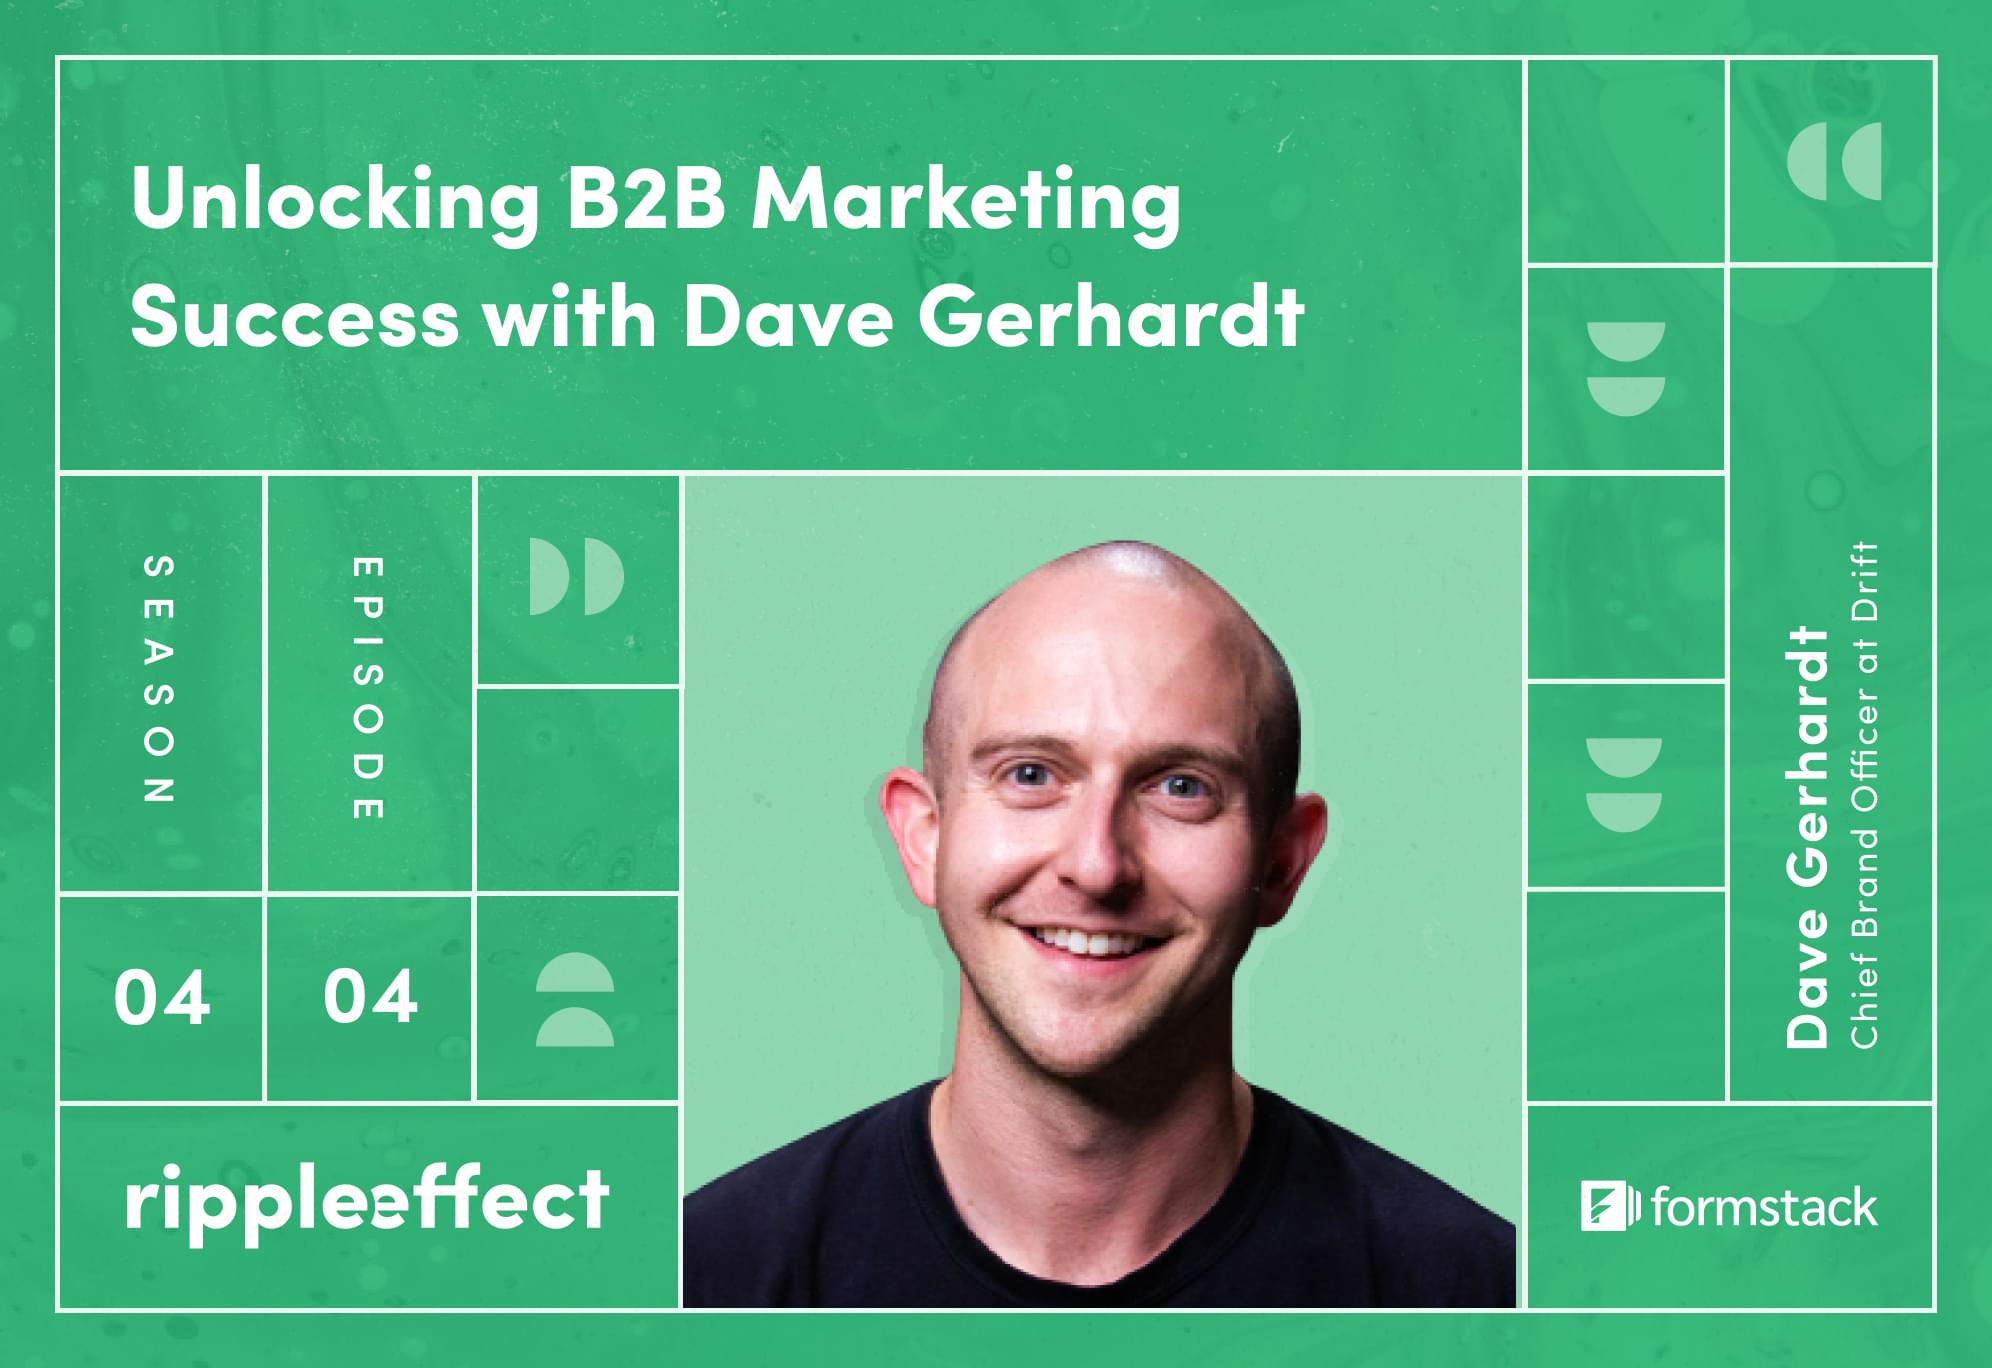 B2B Marketing Accelerator - Dave Gerhardt